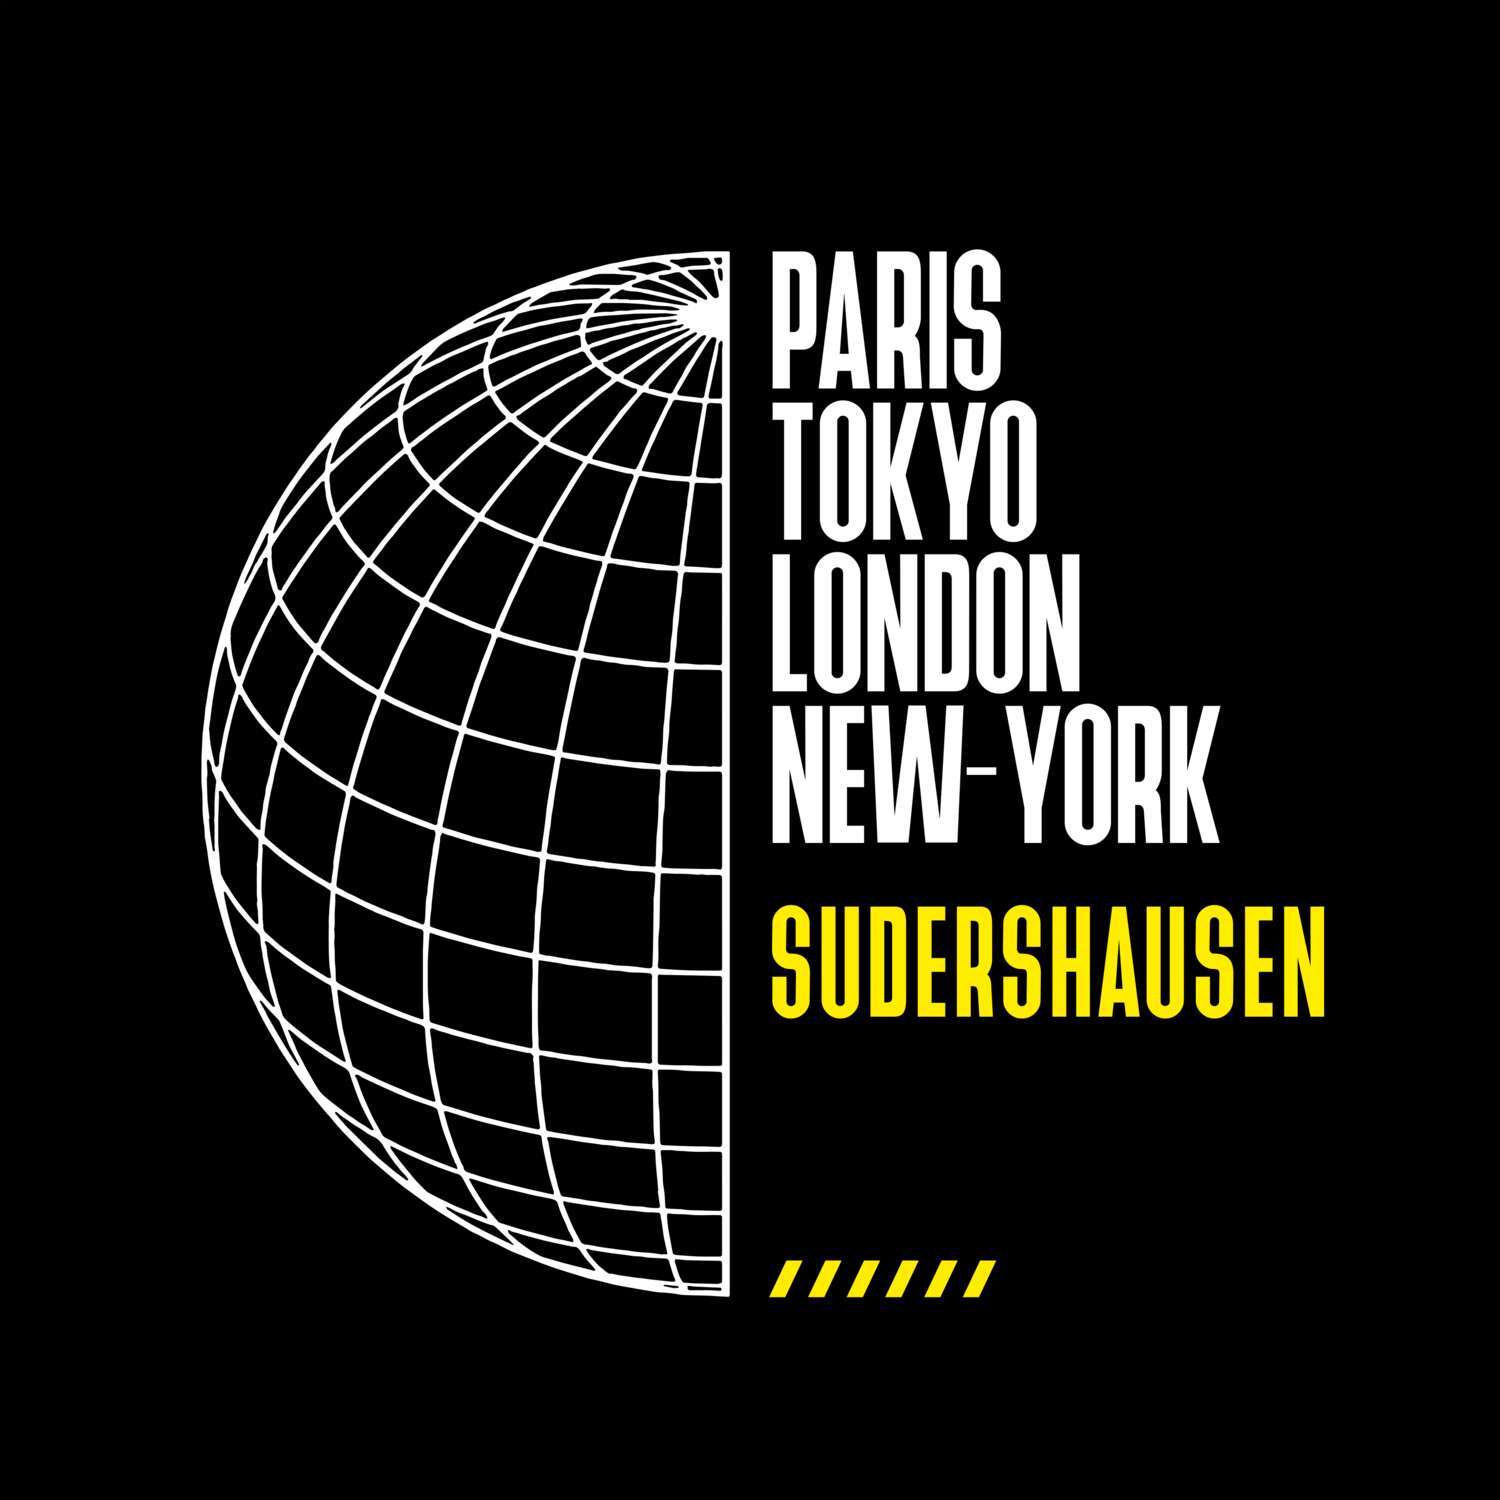 Sudershausen T-Shirt »Paris Tokyo London«